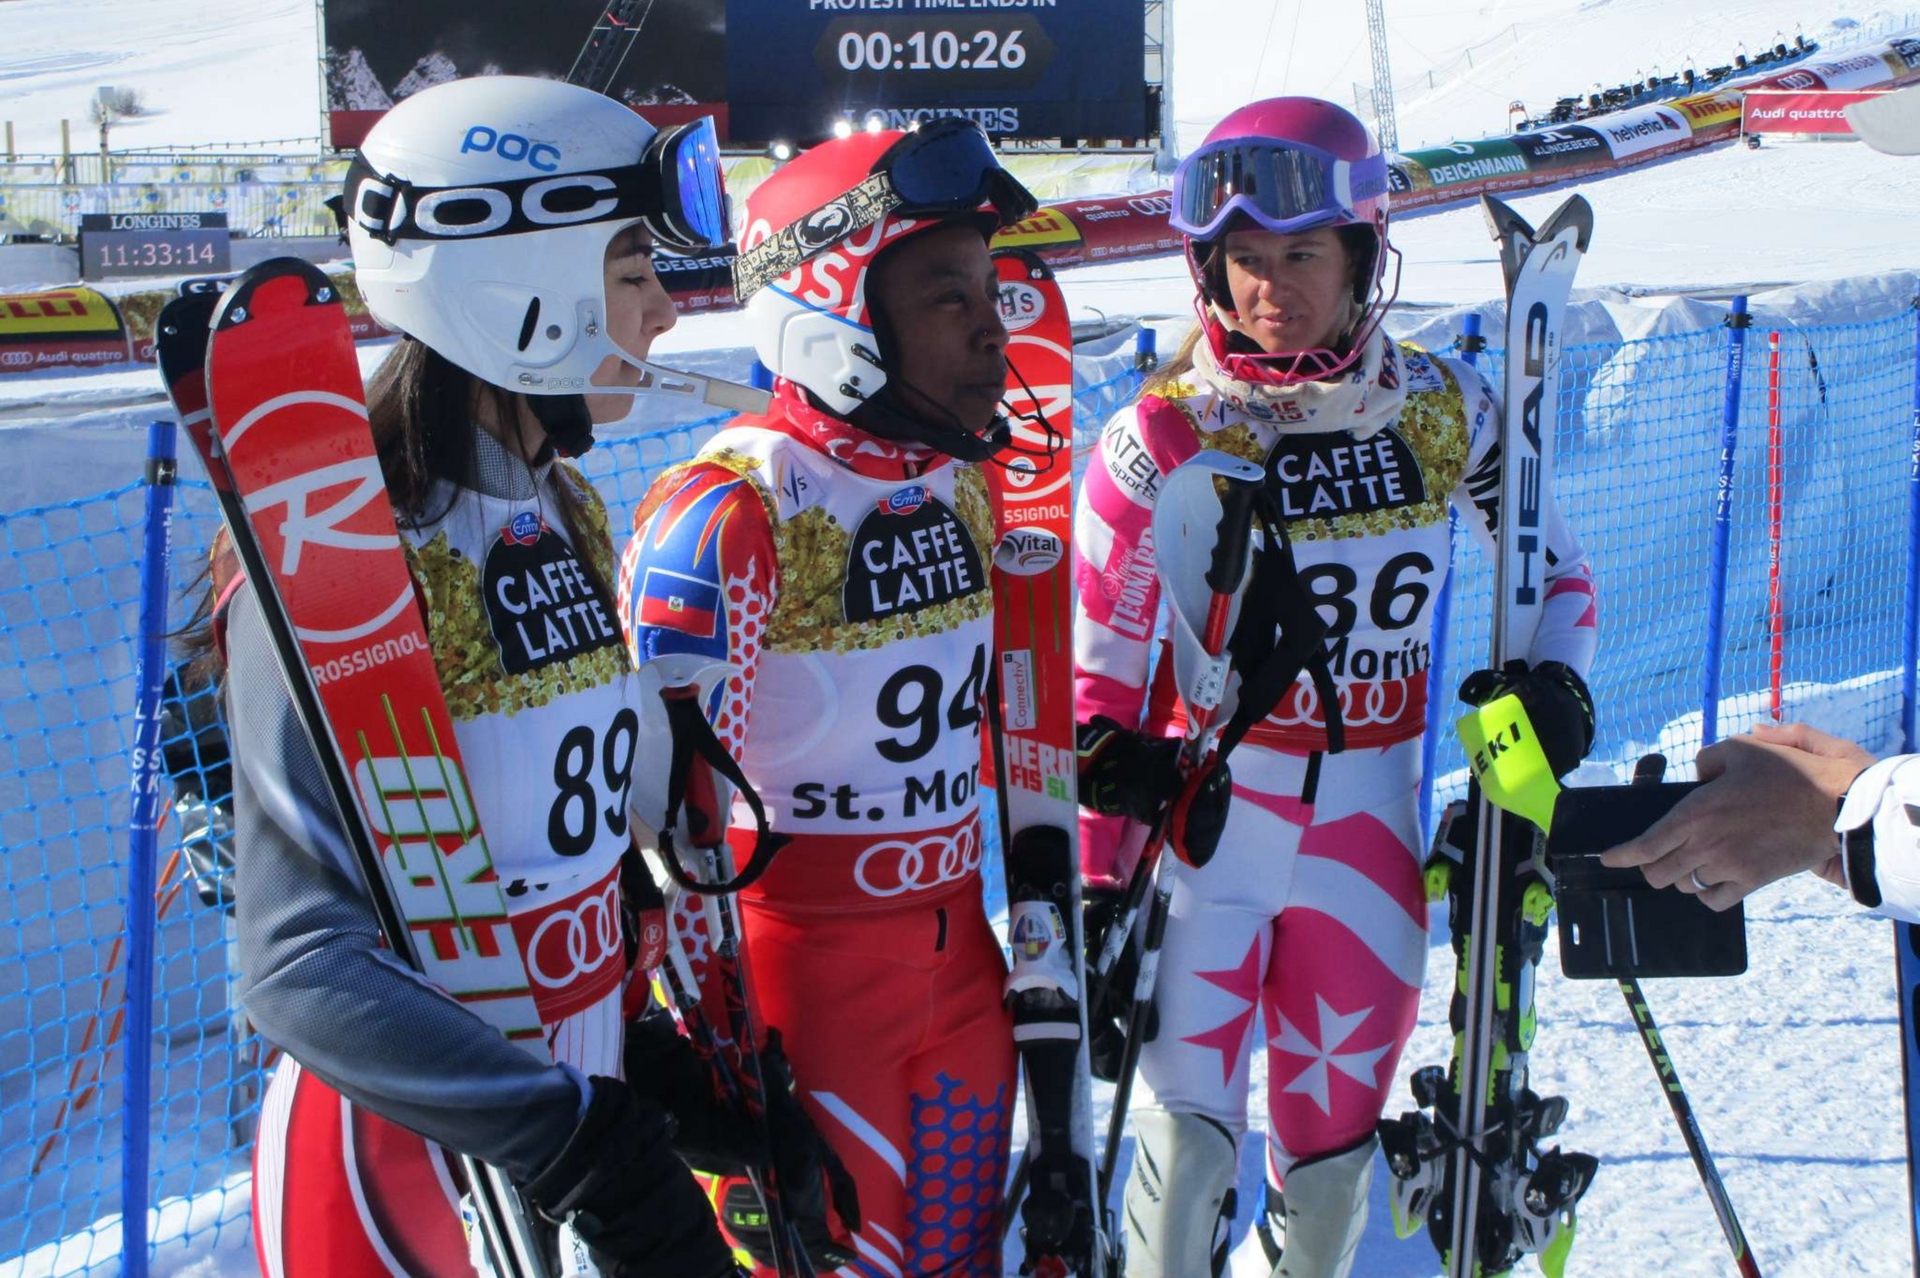 Da sinistra a destra: la slalomista libanese Letitia El Khoury, l’haitiana Celine Marti e la maltese Elise Pellegrin.